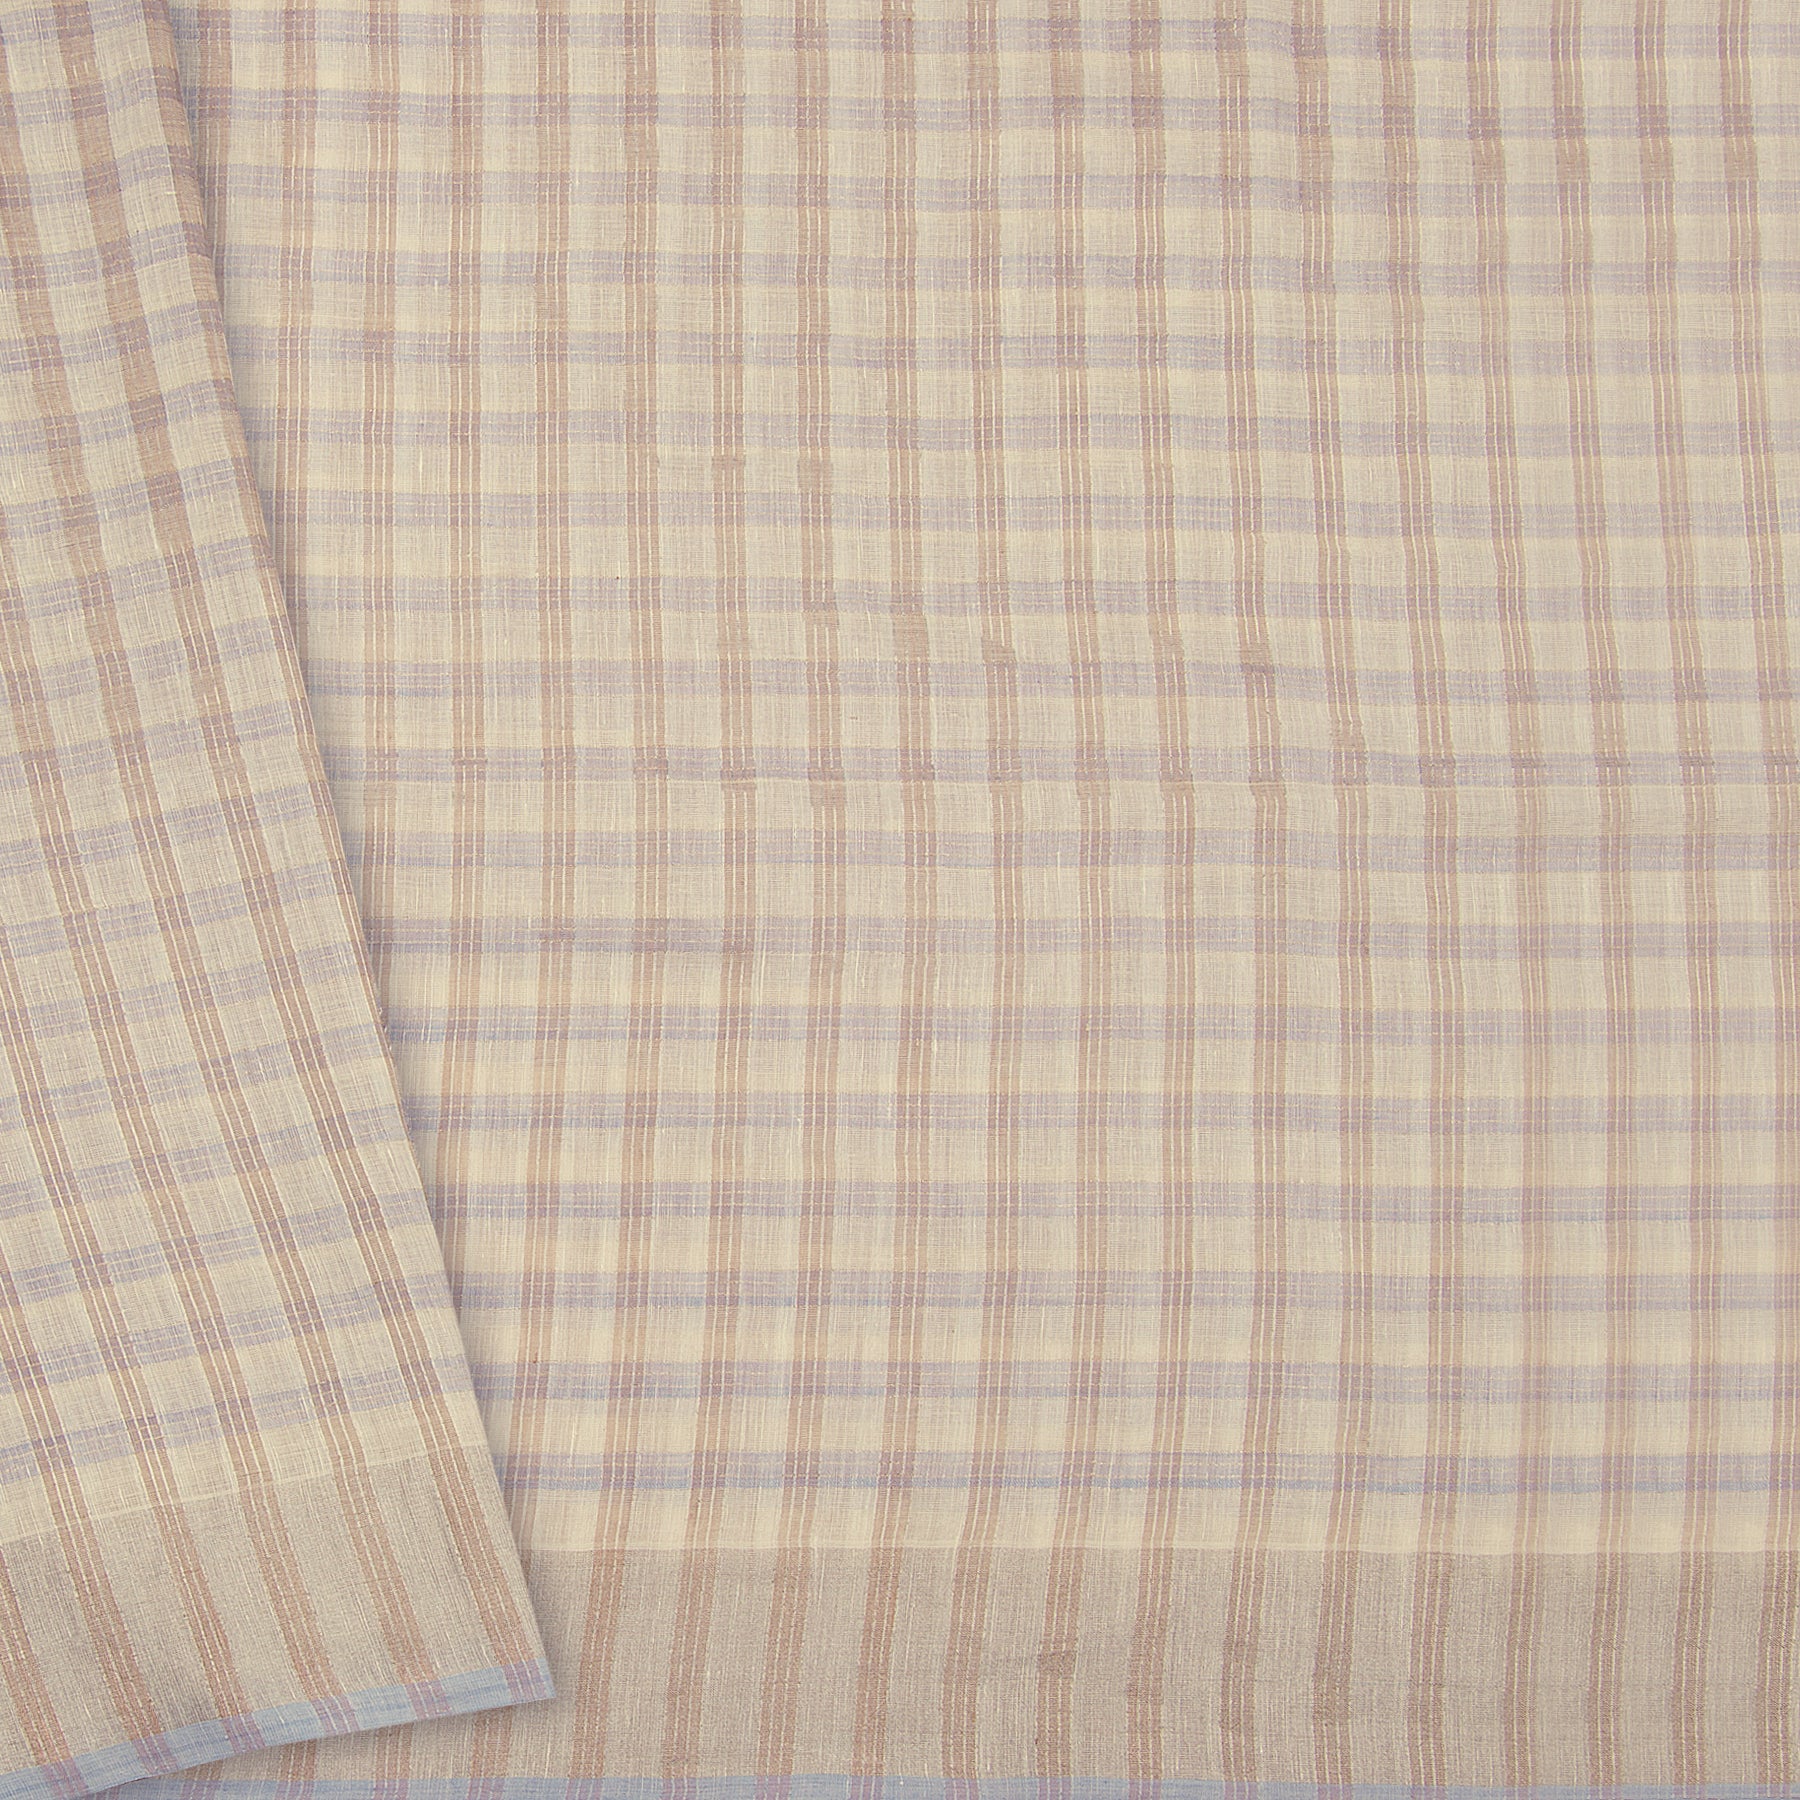 Pradeep Pillai Linen/Cotton Sari 23-008-HS004-00483 - Blouse View